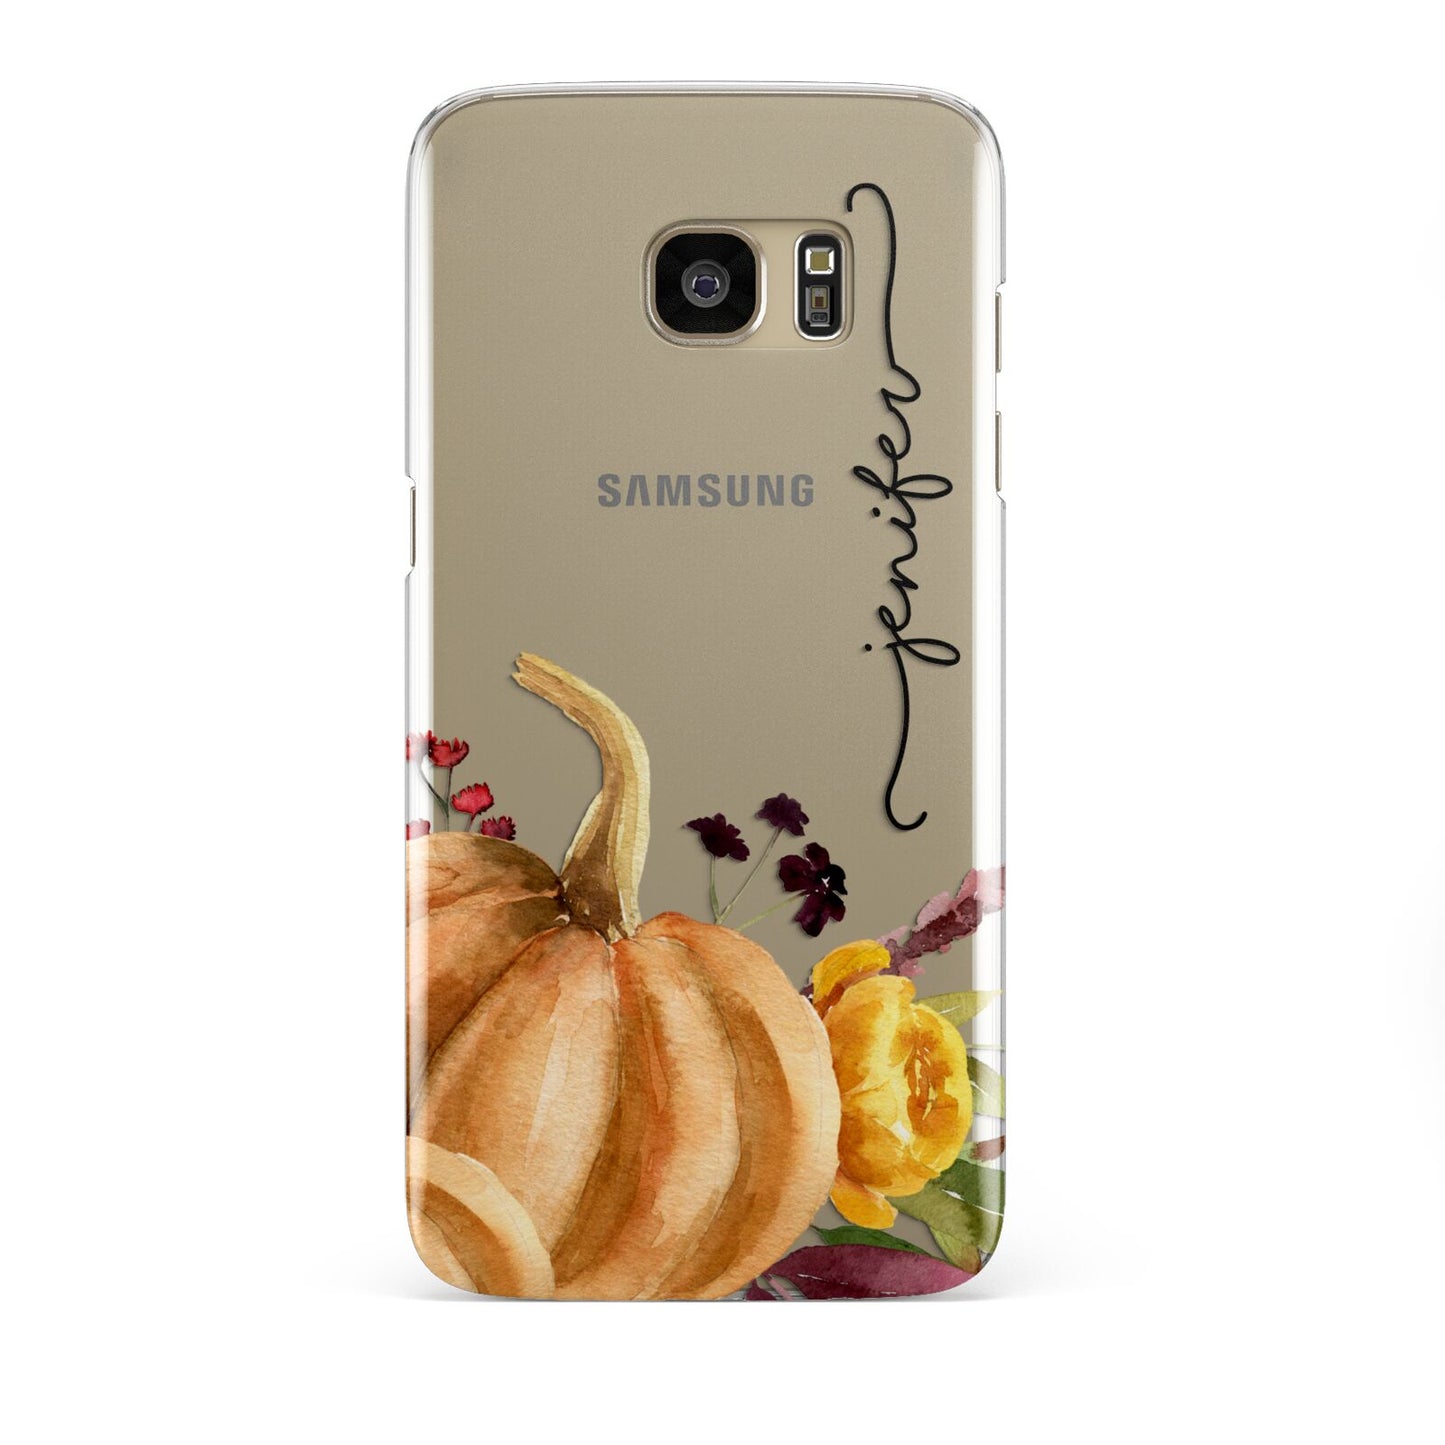 Watercolour Pumpkins with Black Vertical Text Samsung Galaxy S7 Edge Case